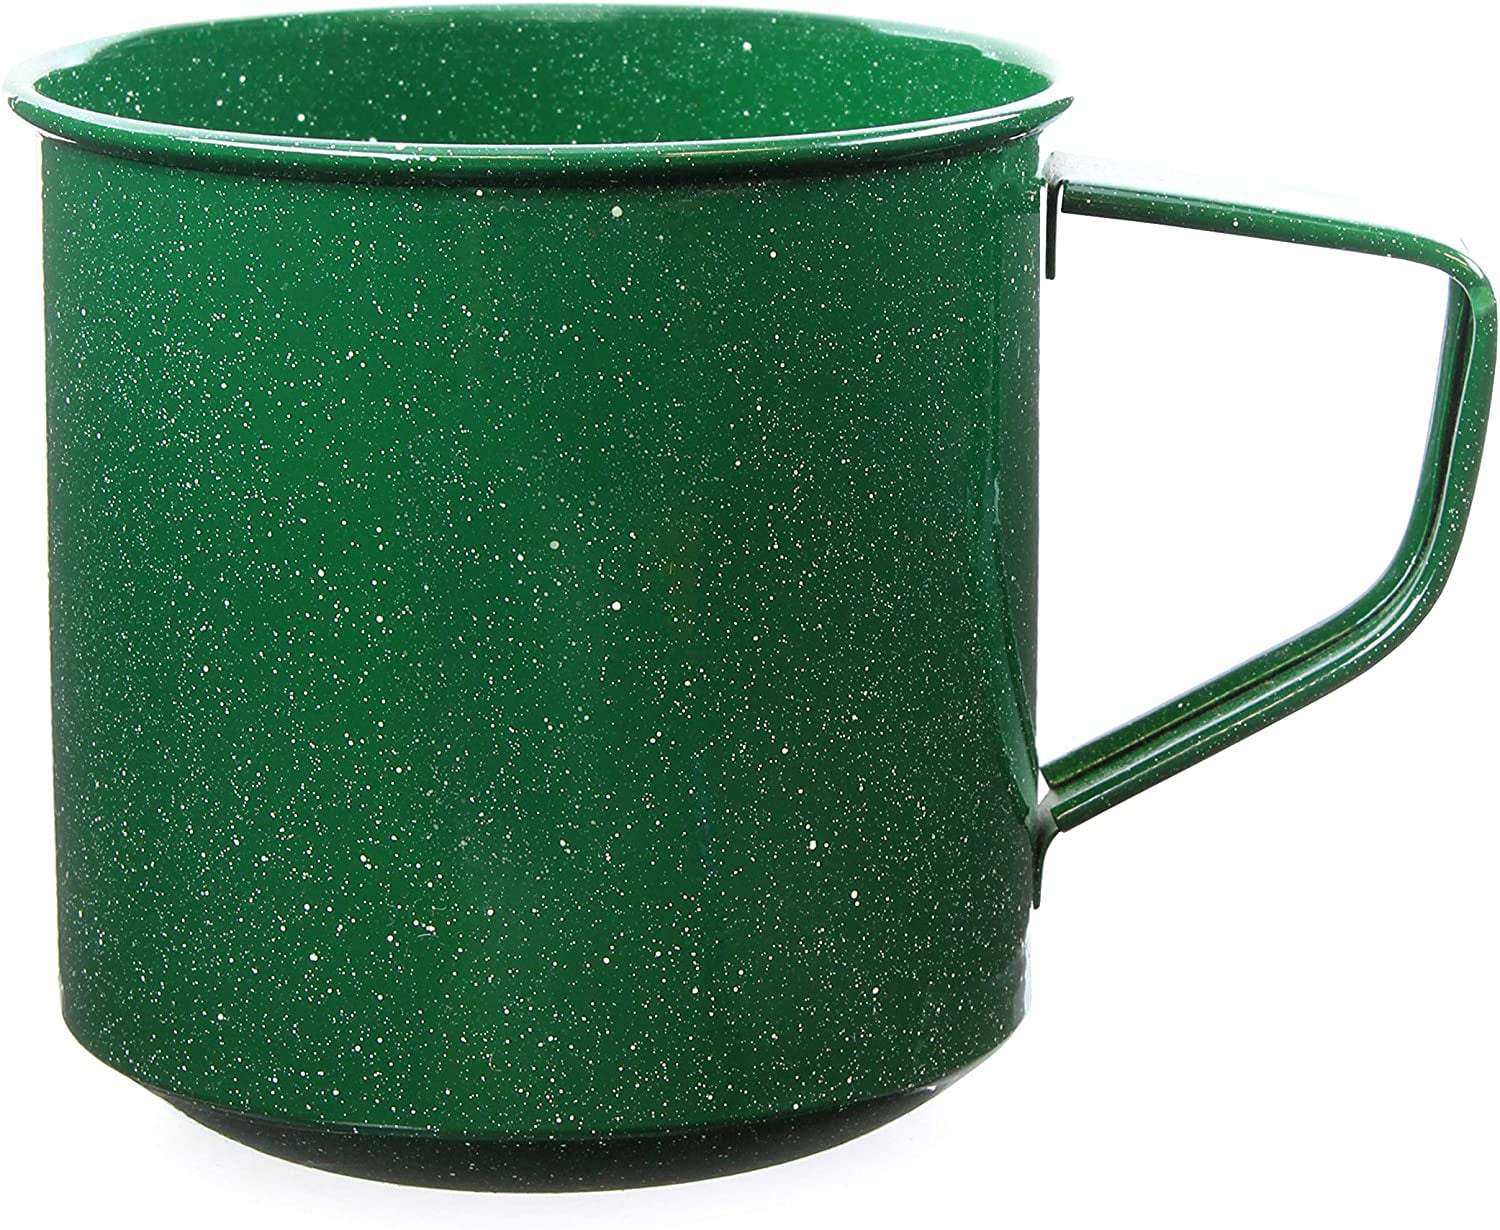 Hemoton Camping Mug Tea Coffee Mug Set of 4 Enamel Drinking Mugs Cups for  Home Use Office Party or C…See more Hemoton Camping Mug Tea Coffee Mug Set